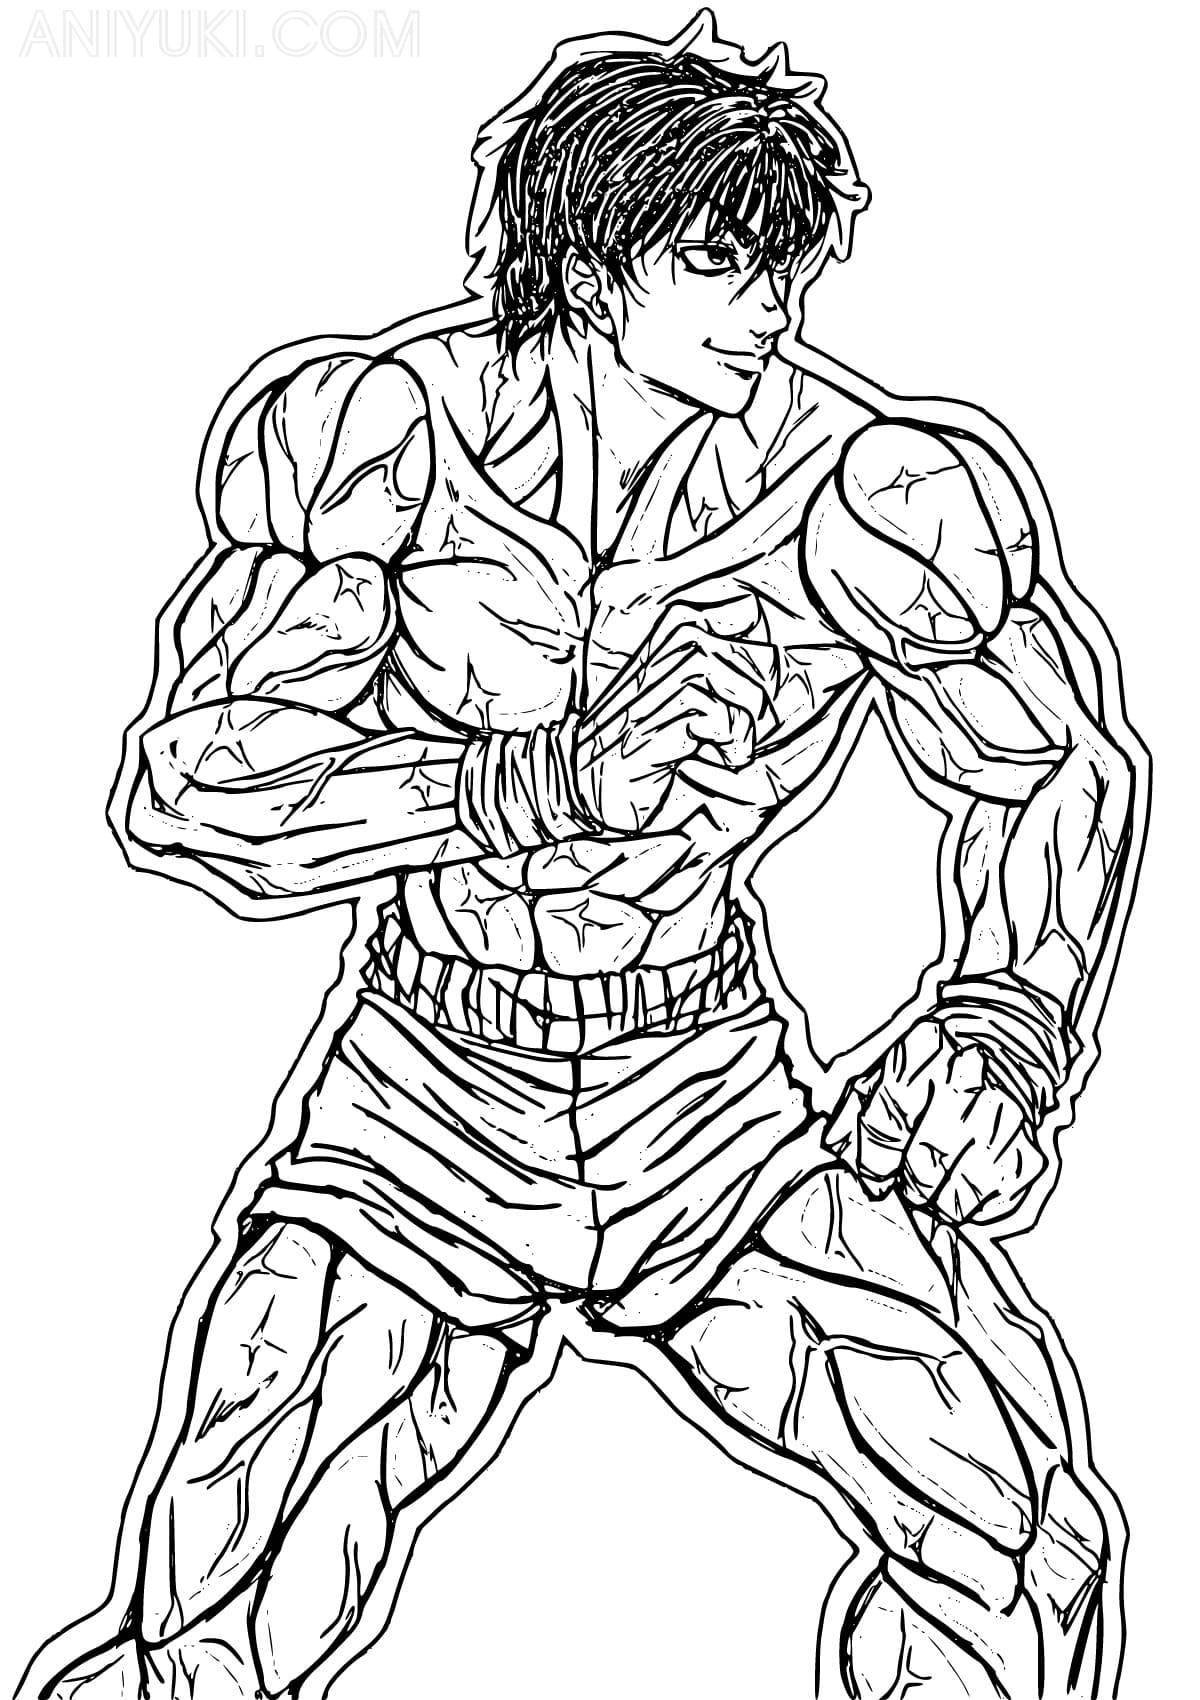 Baki ferocious fighter coloring page